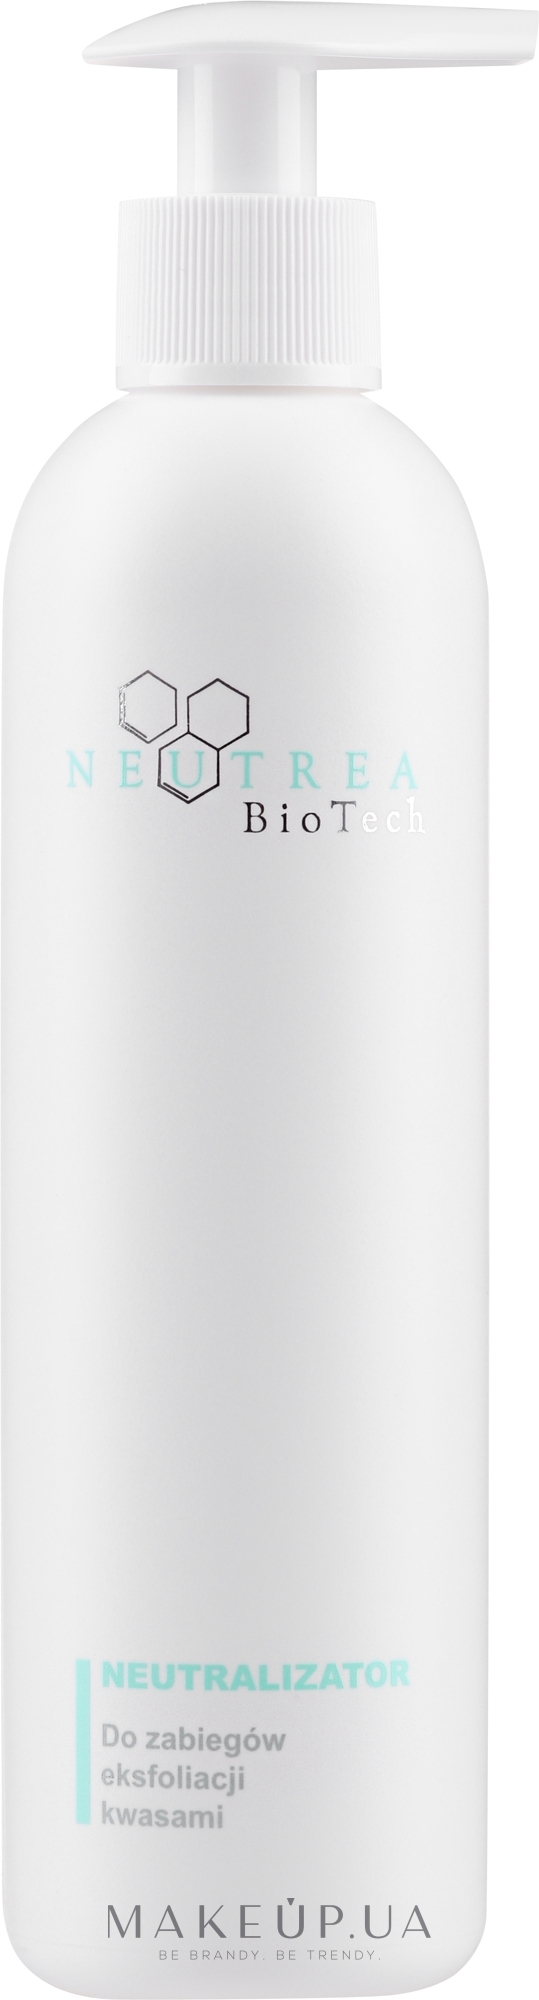 Нейтрализатор для кислотного пилинга - Neutrea BioTech Peel Neutralizer — фото 250ml